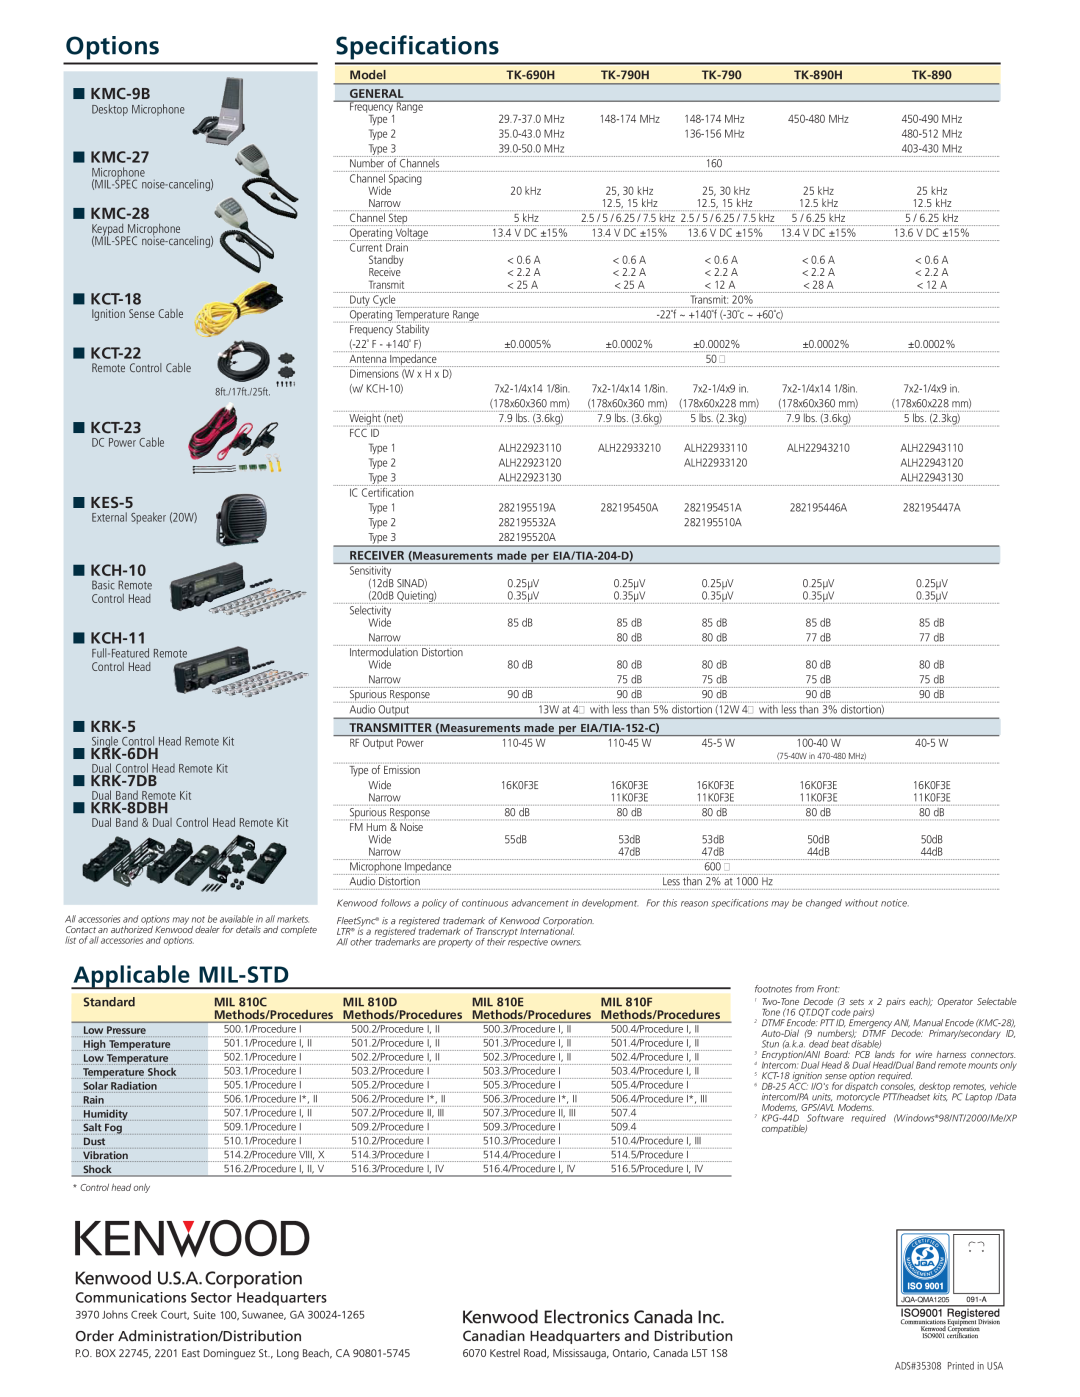 Kenwood TK-690 Options, Specifications, Applicable MIL-STD, KMC-9B, KMC-27, KMC-28, KCT-18, KCT-22, KCT-23, KES-5, KCH-10 